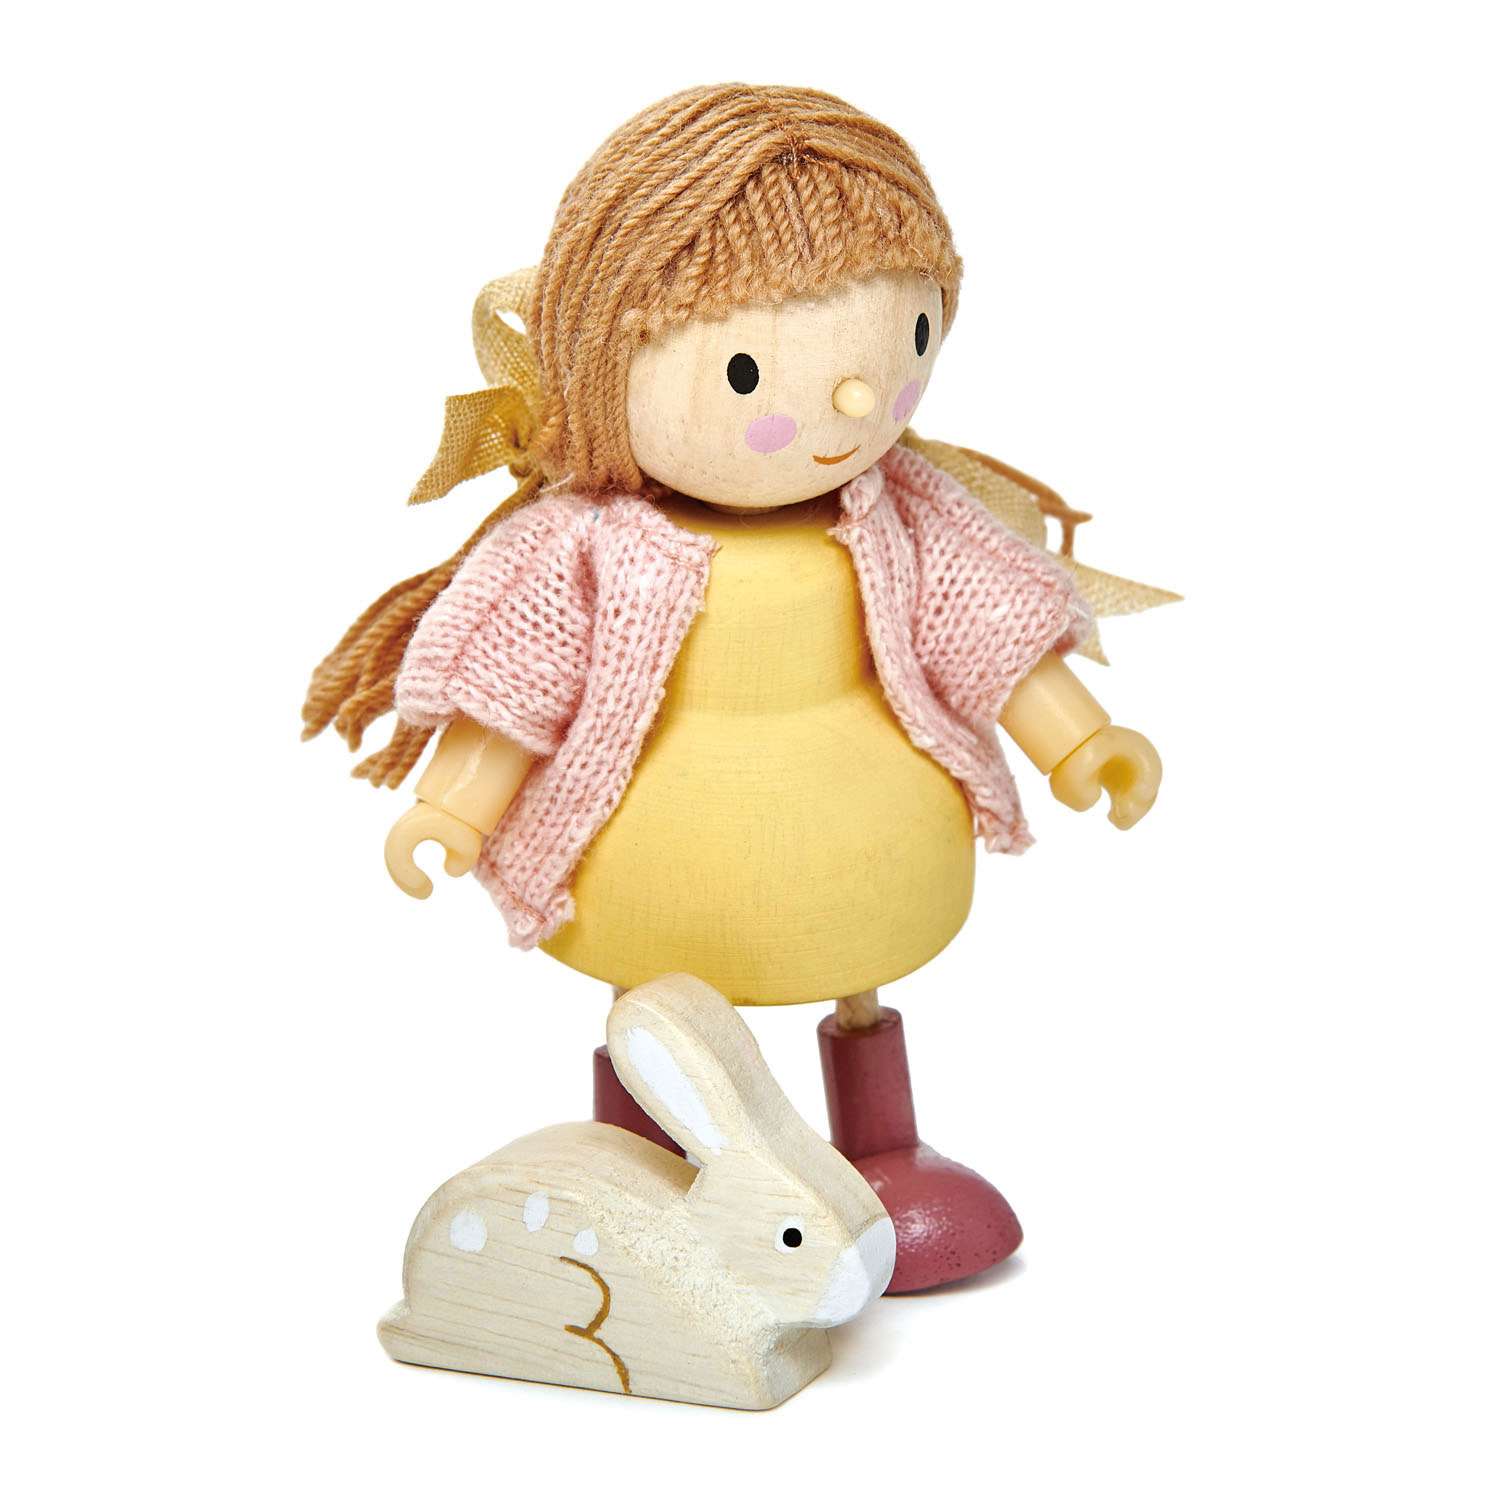 Tender Leaf Toys ของเล่นไม้ ตุ๊กตา เอมี่และกระต่ายตัวโปรด Amy and Her Rabbit